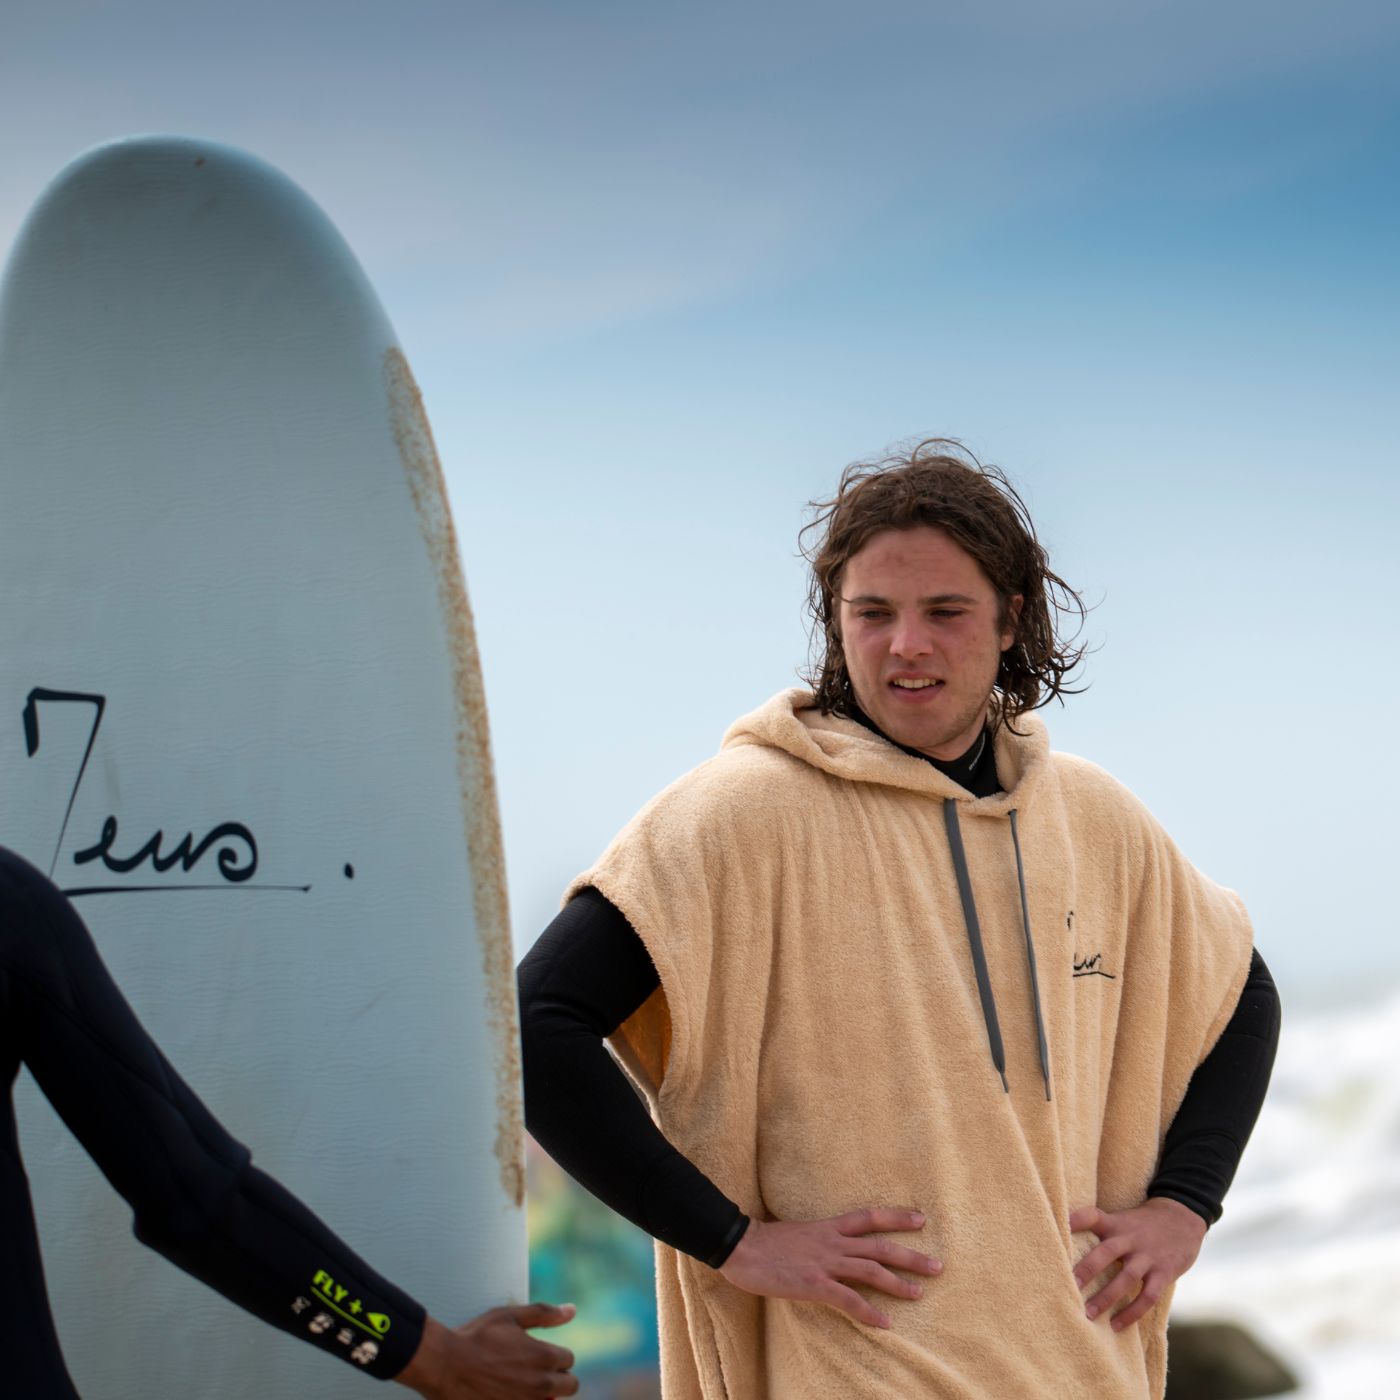 Poncho Zeus Pegaze Beigeproduct_type#surf_#surfshop#_zeus-surfboards_